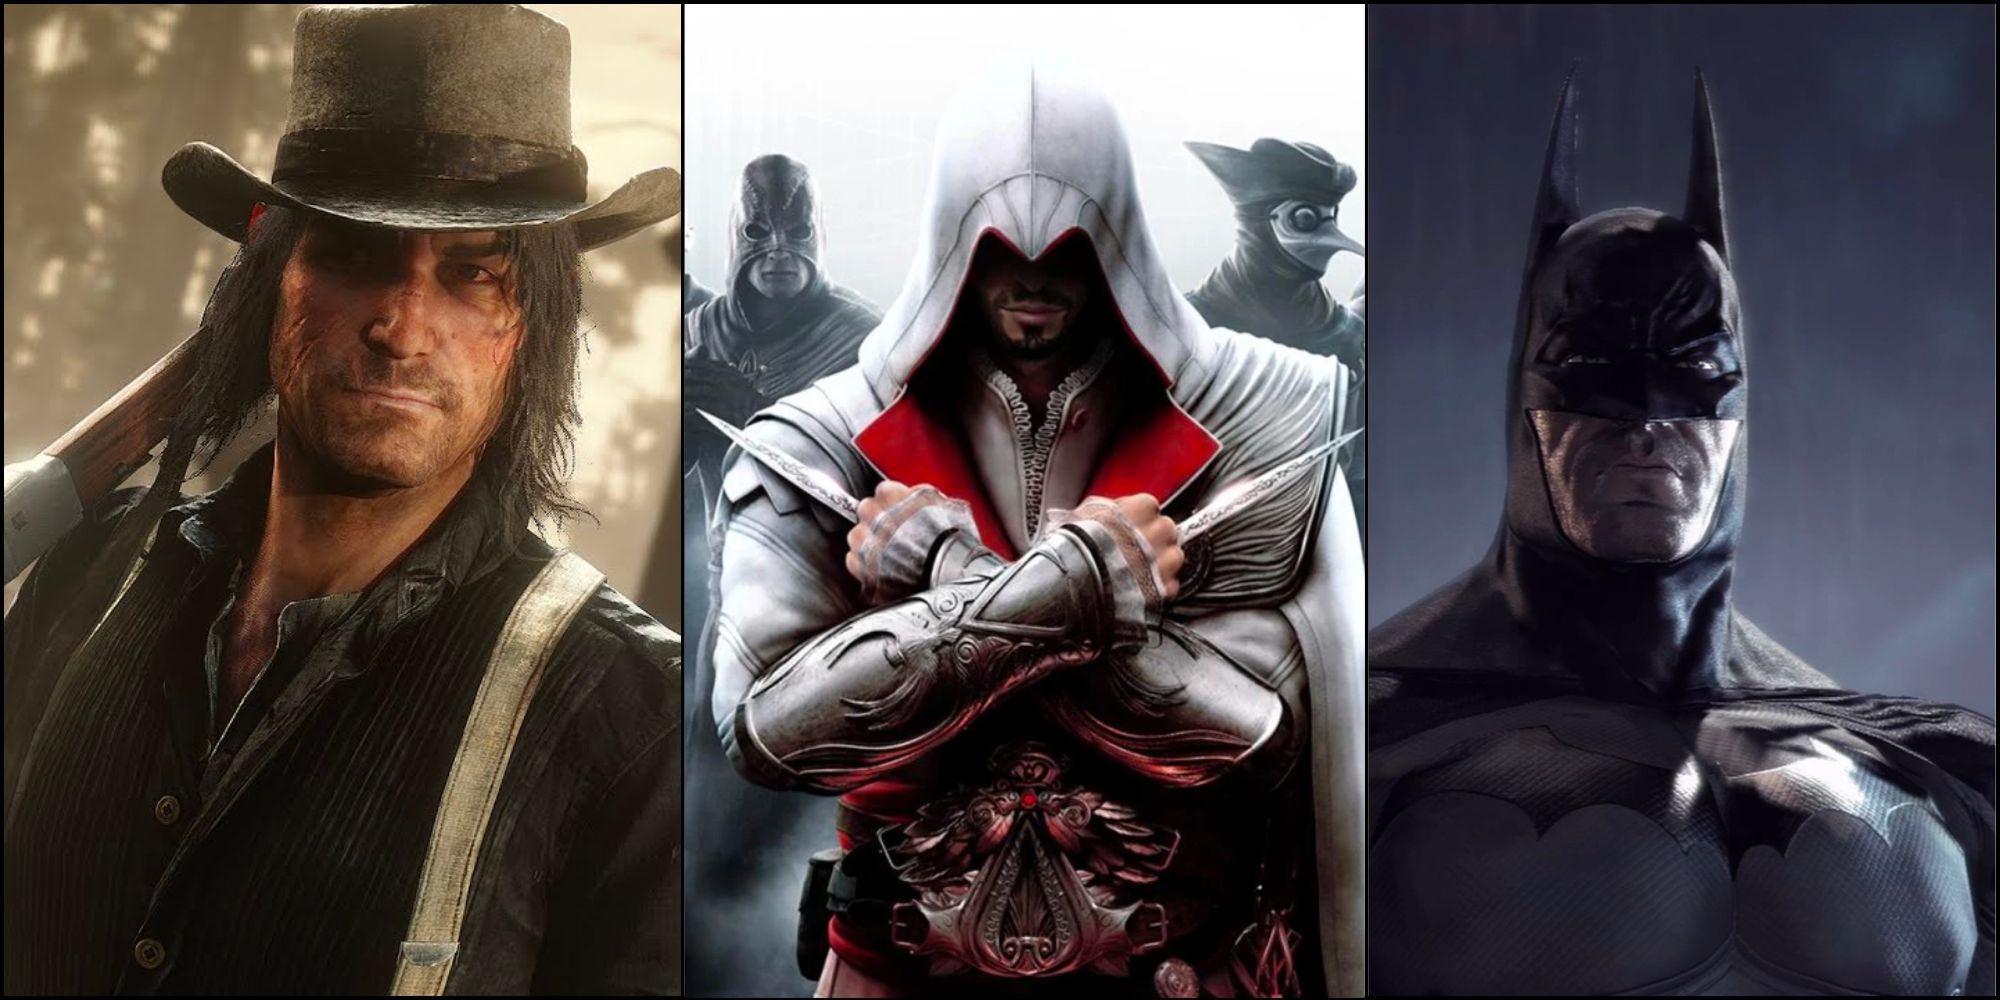 John Marsten, Ezio Auditore, Batman in Split Image Collage